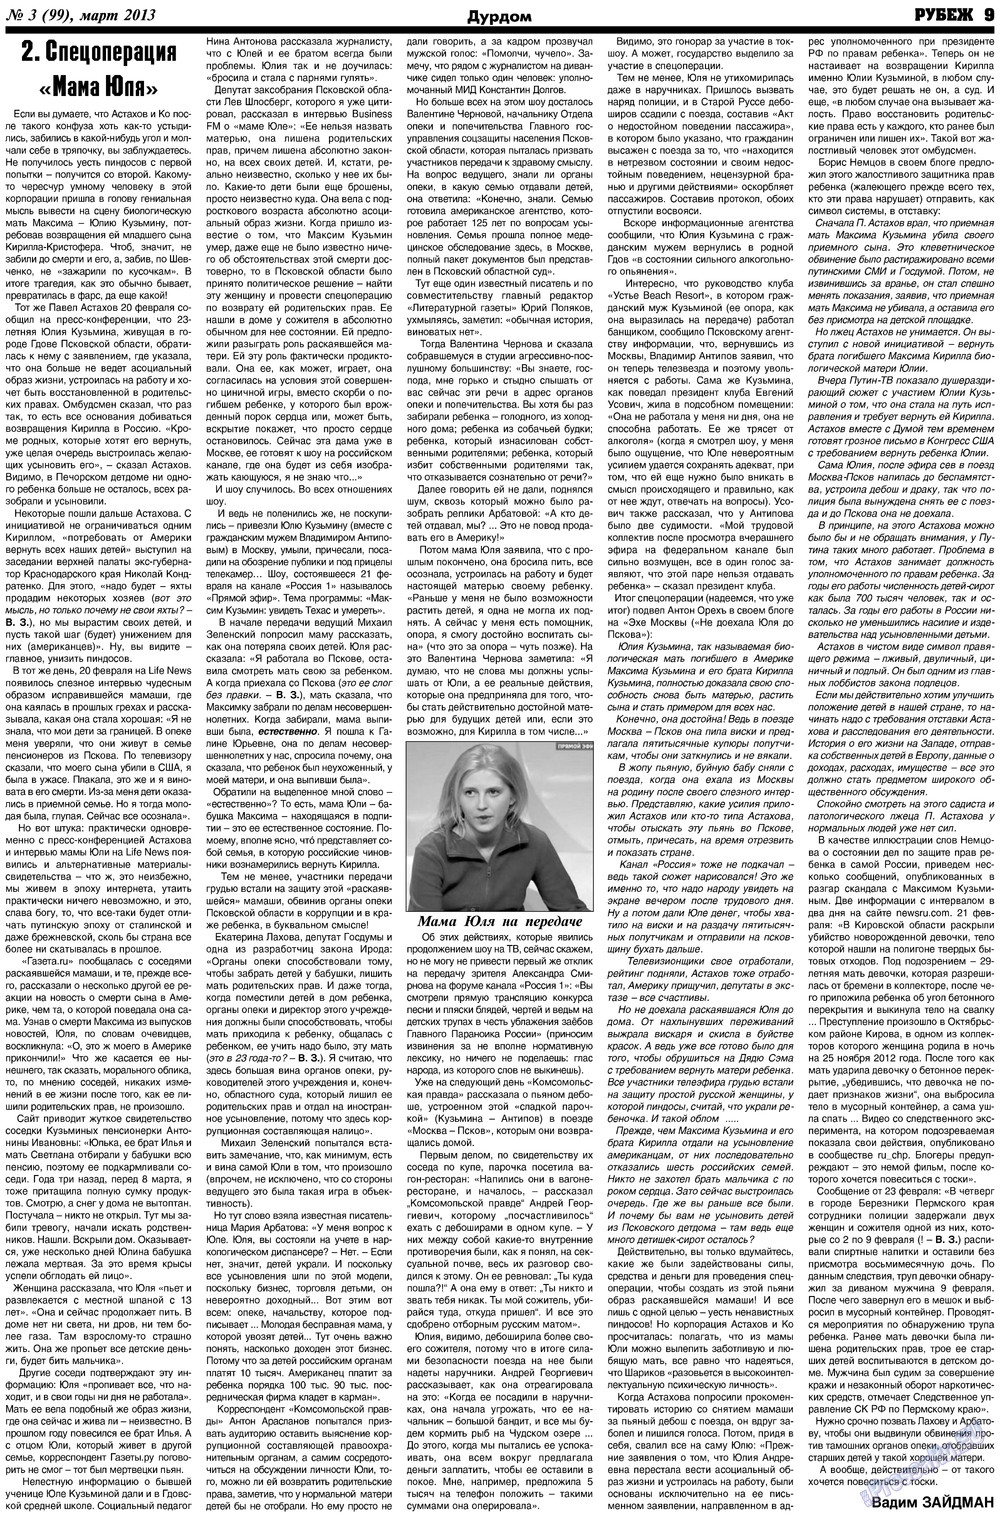 Рубеж, газета. 2013 №3 стр.9